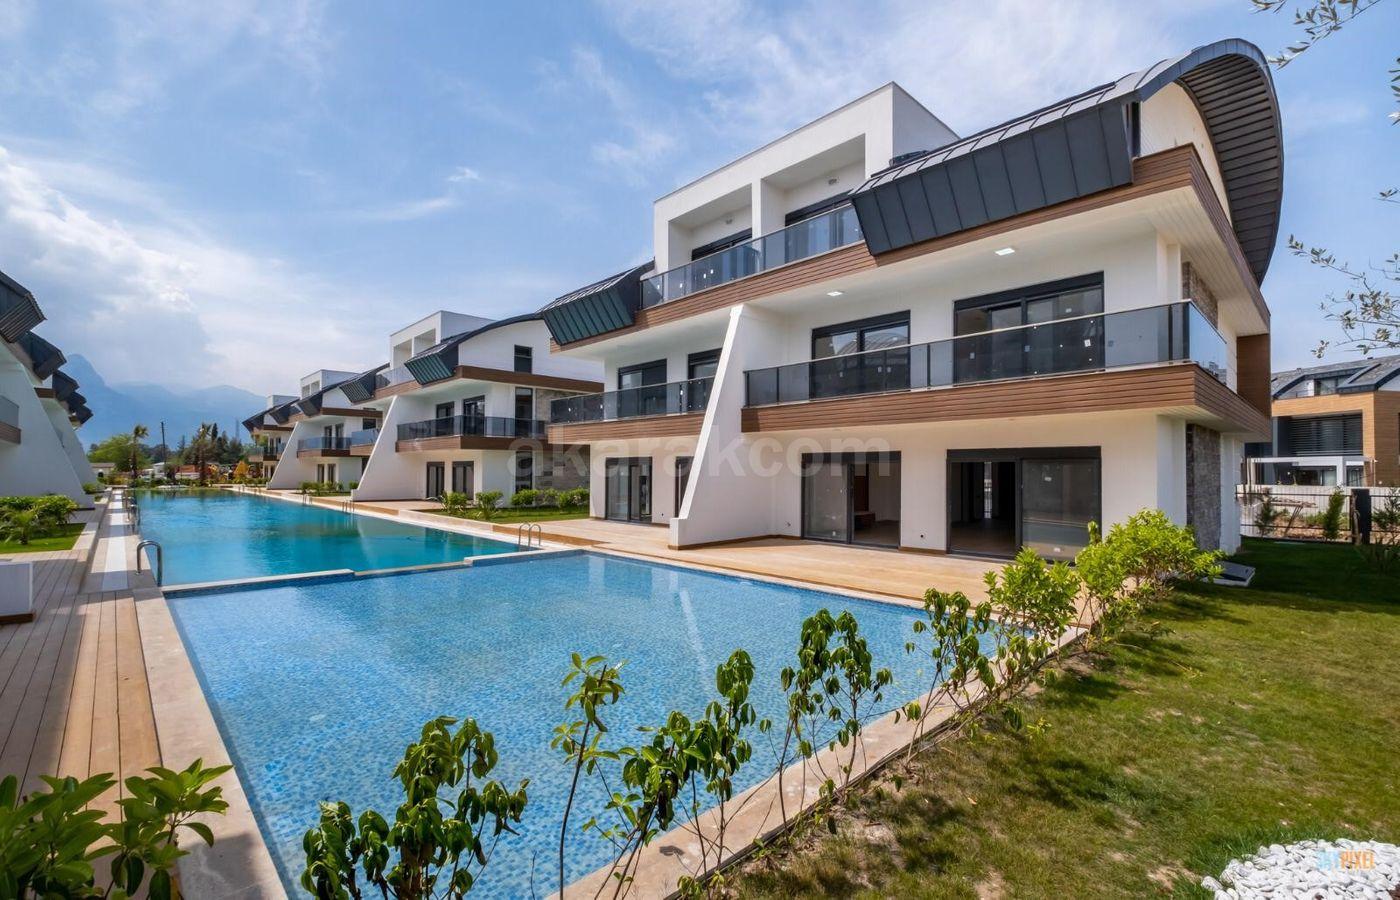 [660] Luxury Villas For sale in Antalya | Turkey Properties